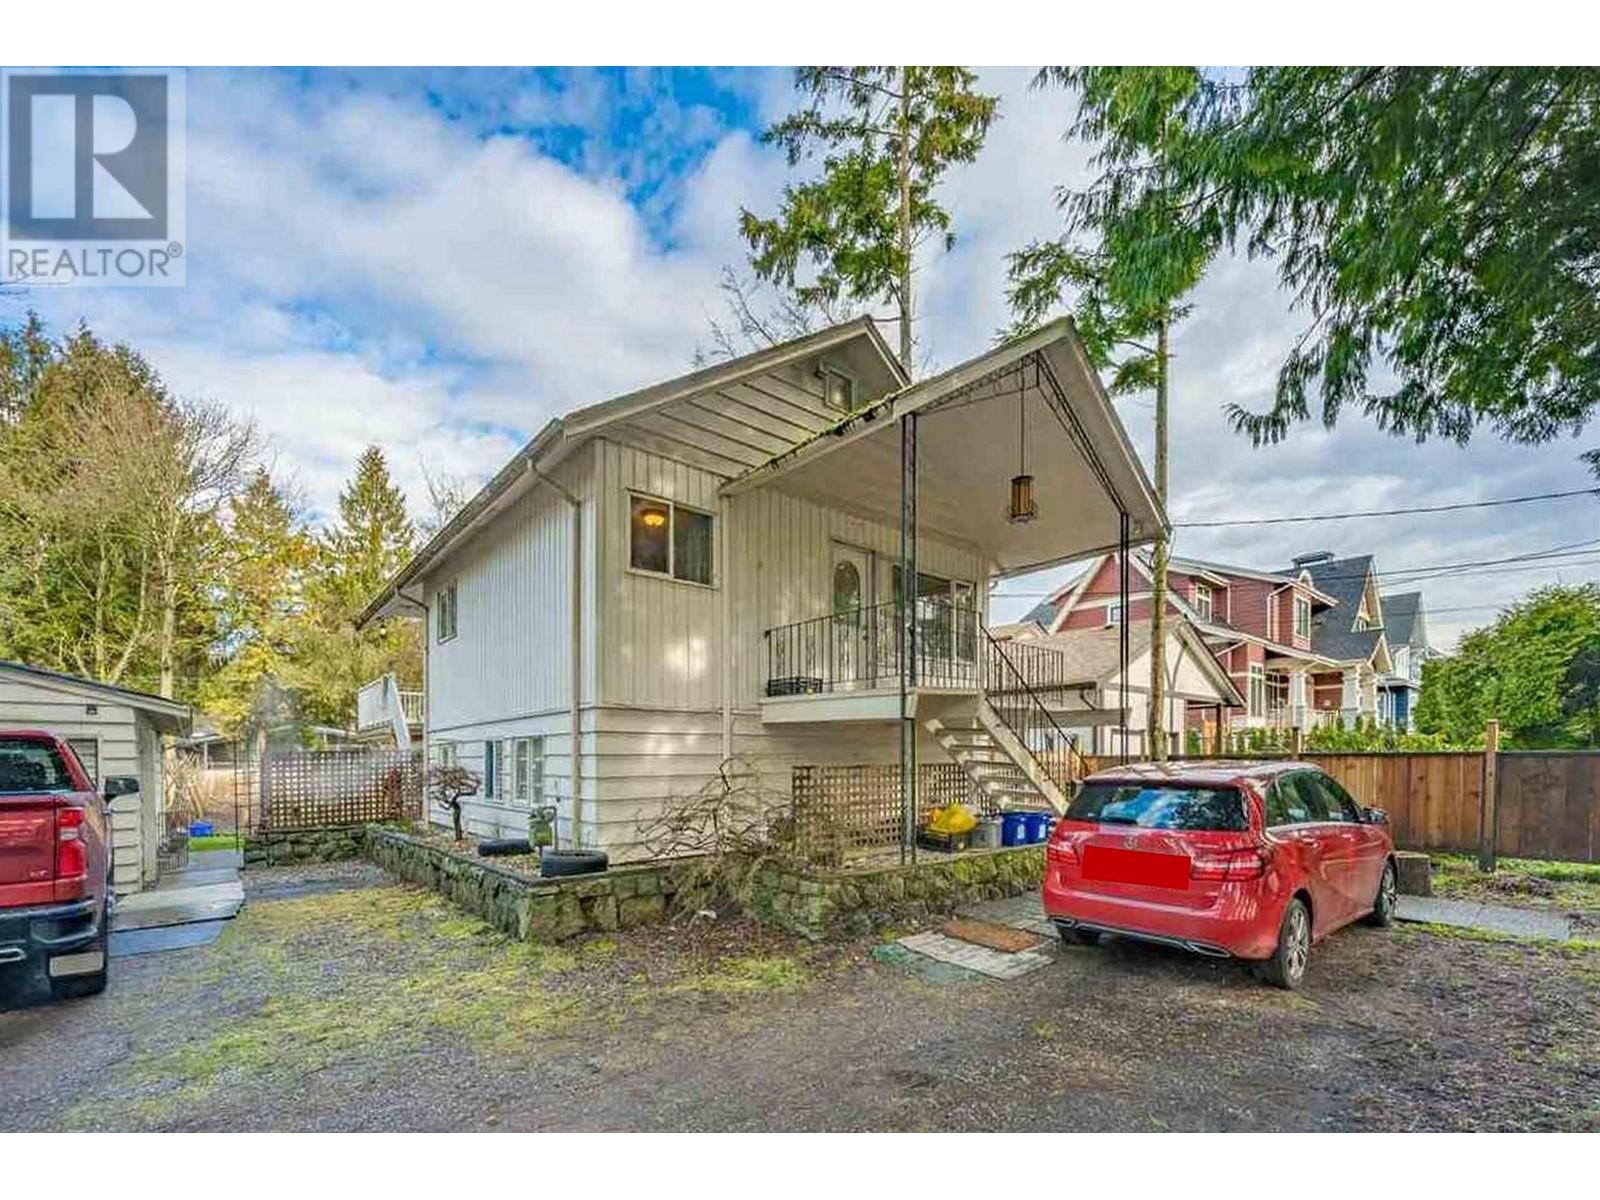 8 Bedroom Residential Home For Sale | 3887 W 51st Avenue | Vancouver | V6N3V9